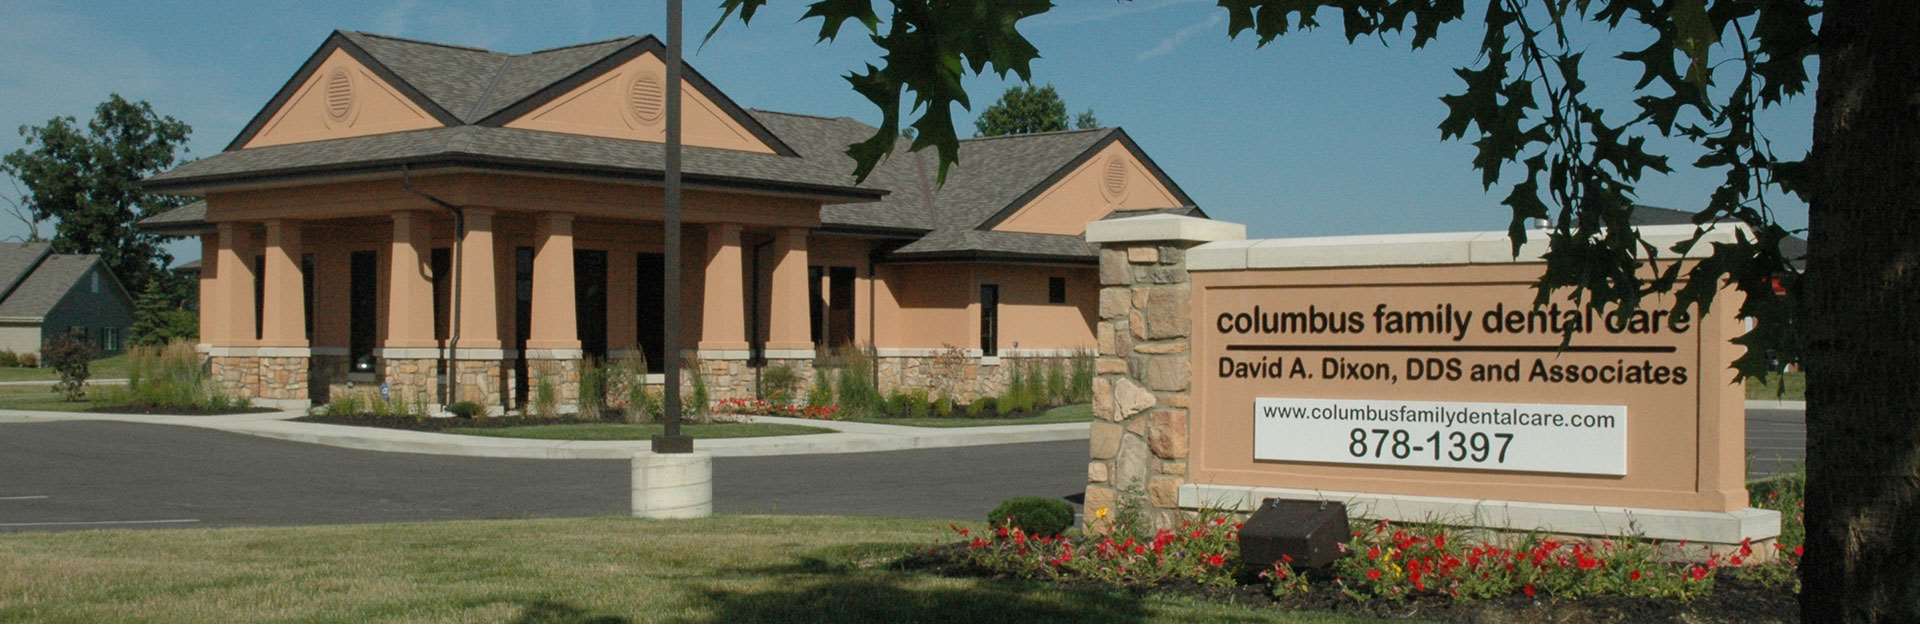 Columbus Family Dental Care - Slideshow Picture 1